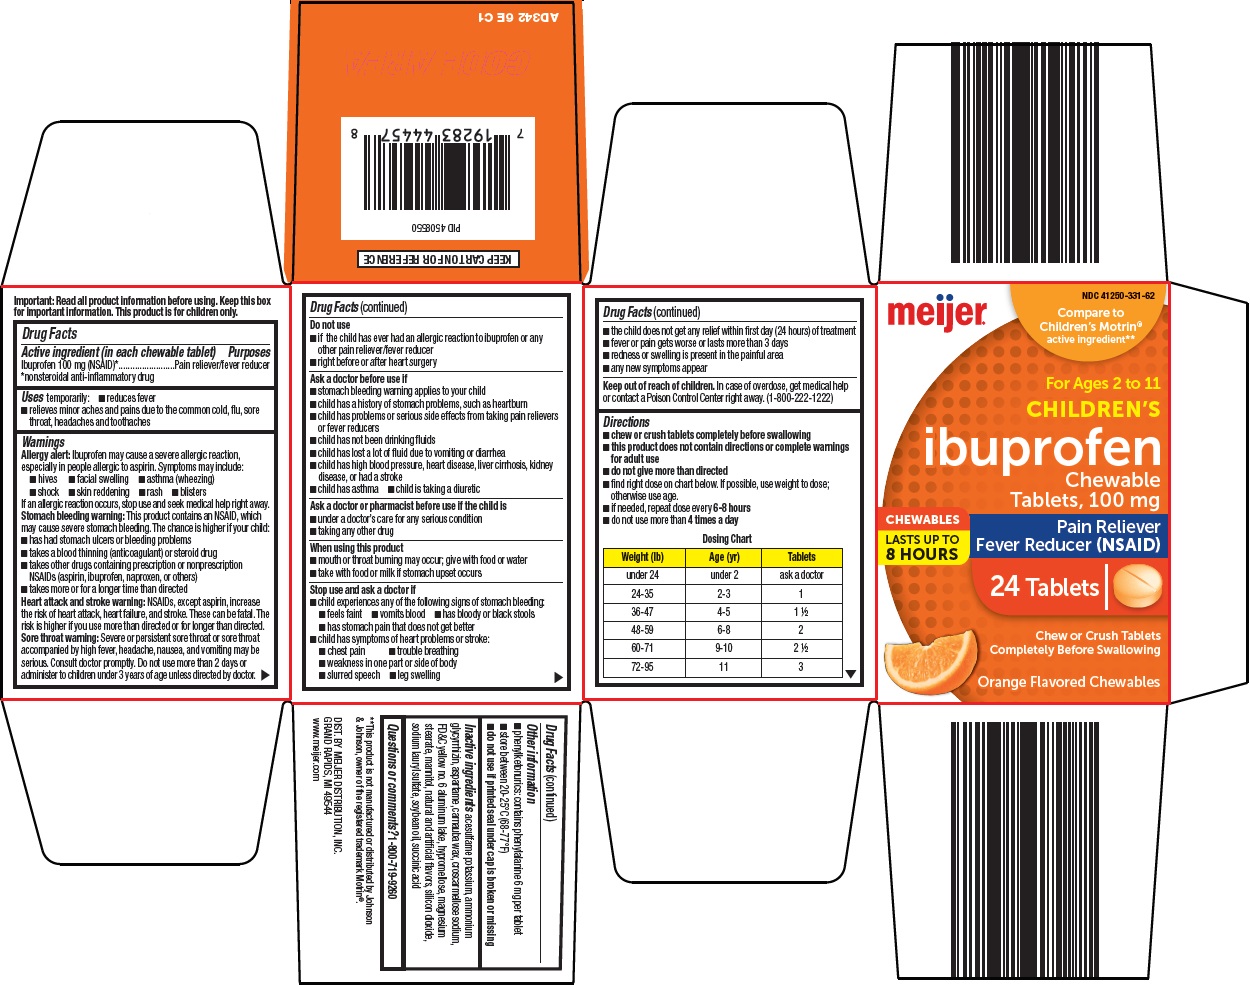 461-6e-ibuprofen.jpg